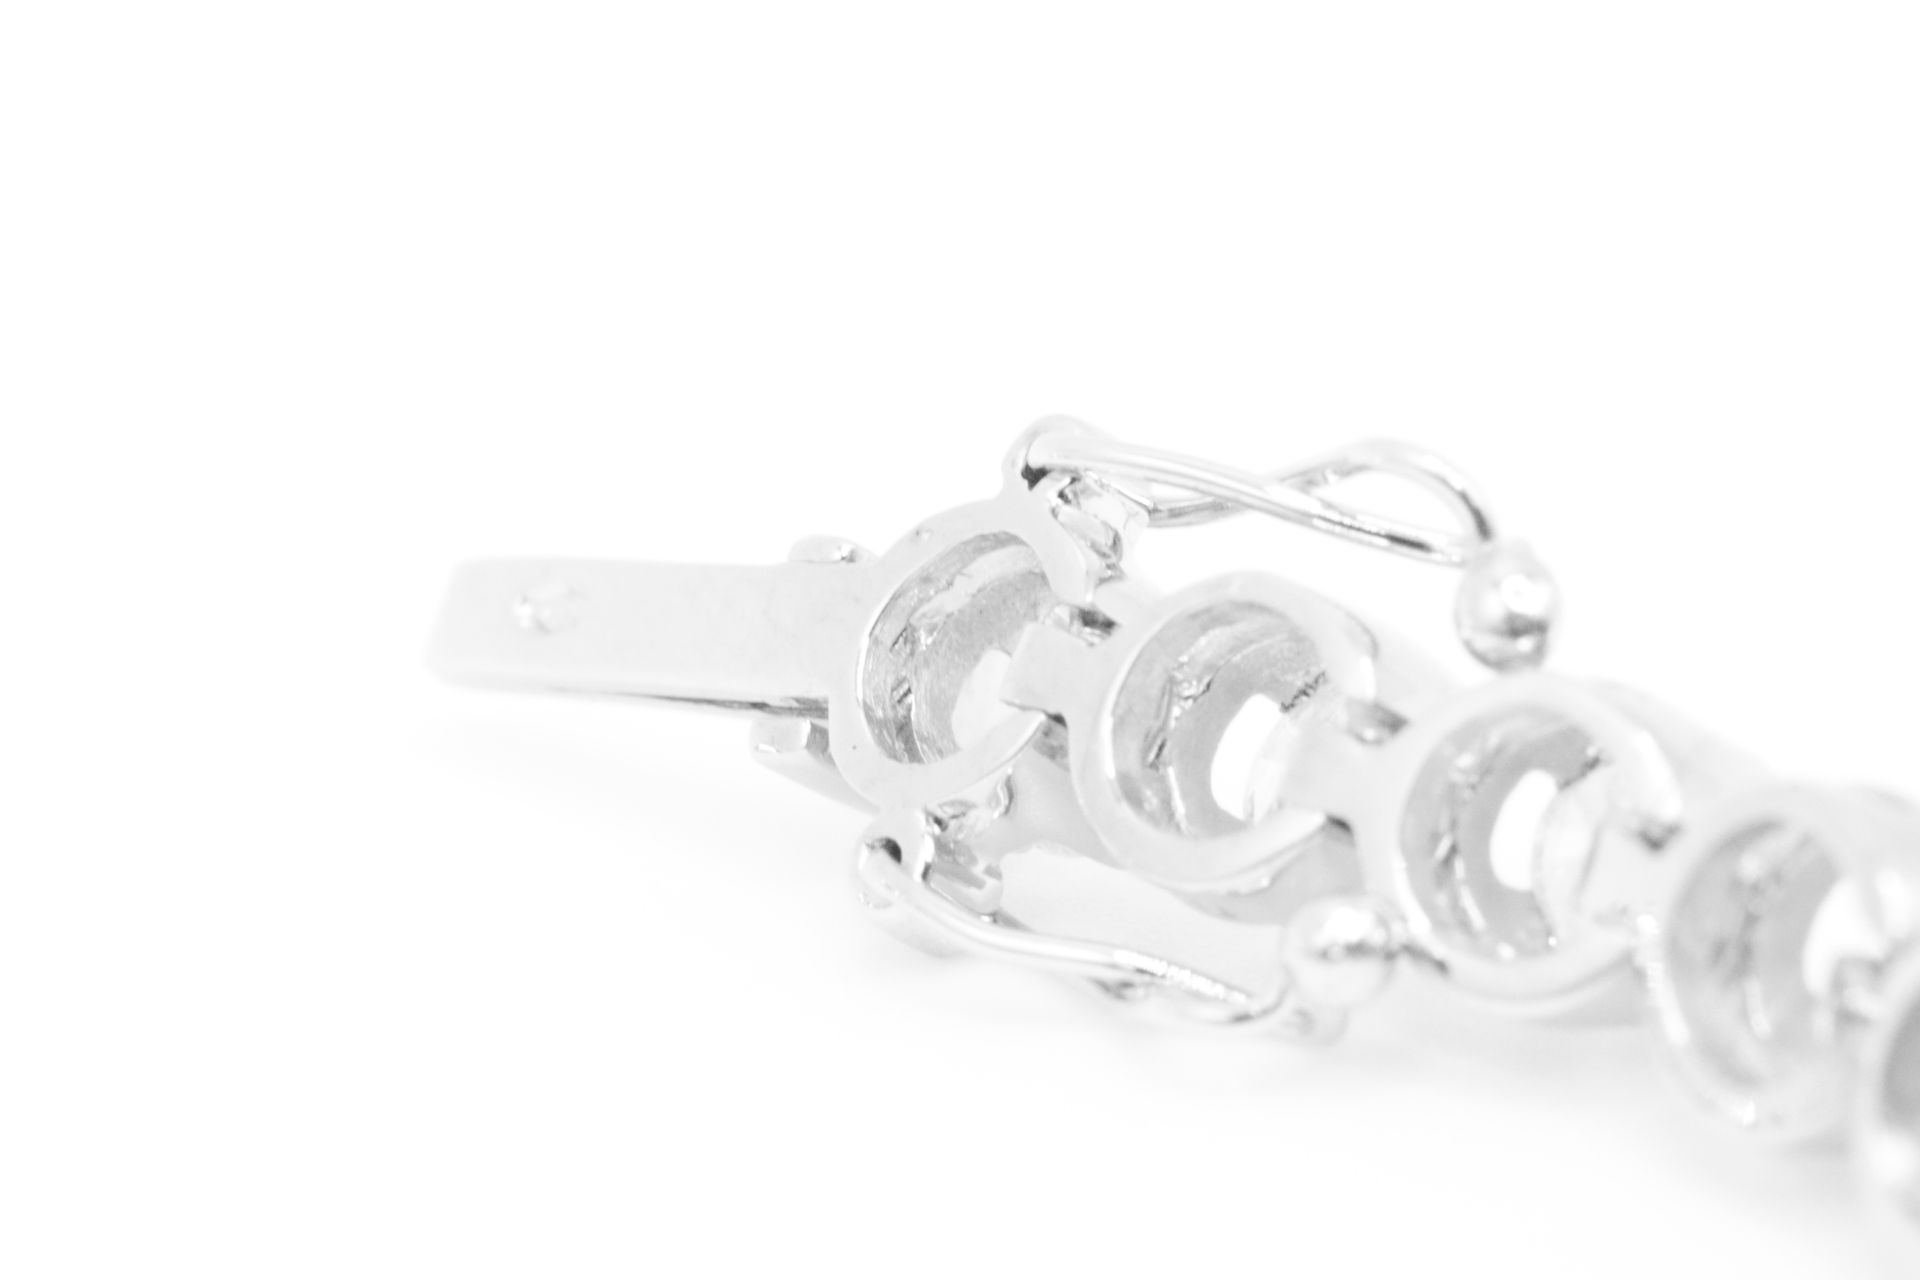 7.0 Carat 18ct White Gold Tennis Bracelet set with Round Brilliant Cut Natural Diamonds - Image 14 of 16